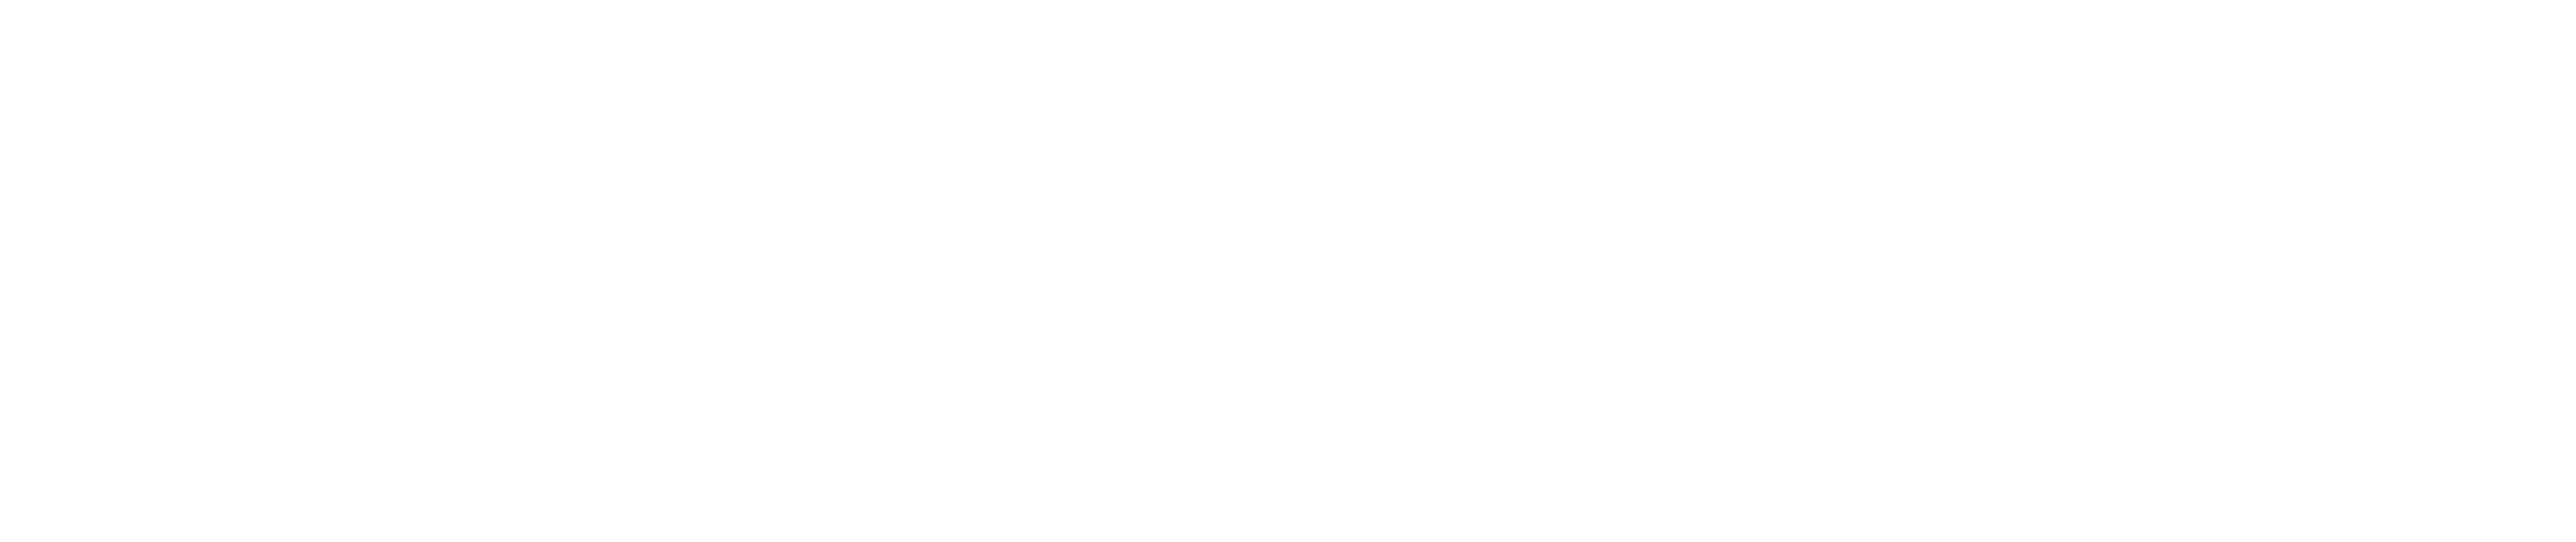 Guam Radiology Consultants - logo.white